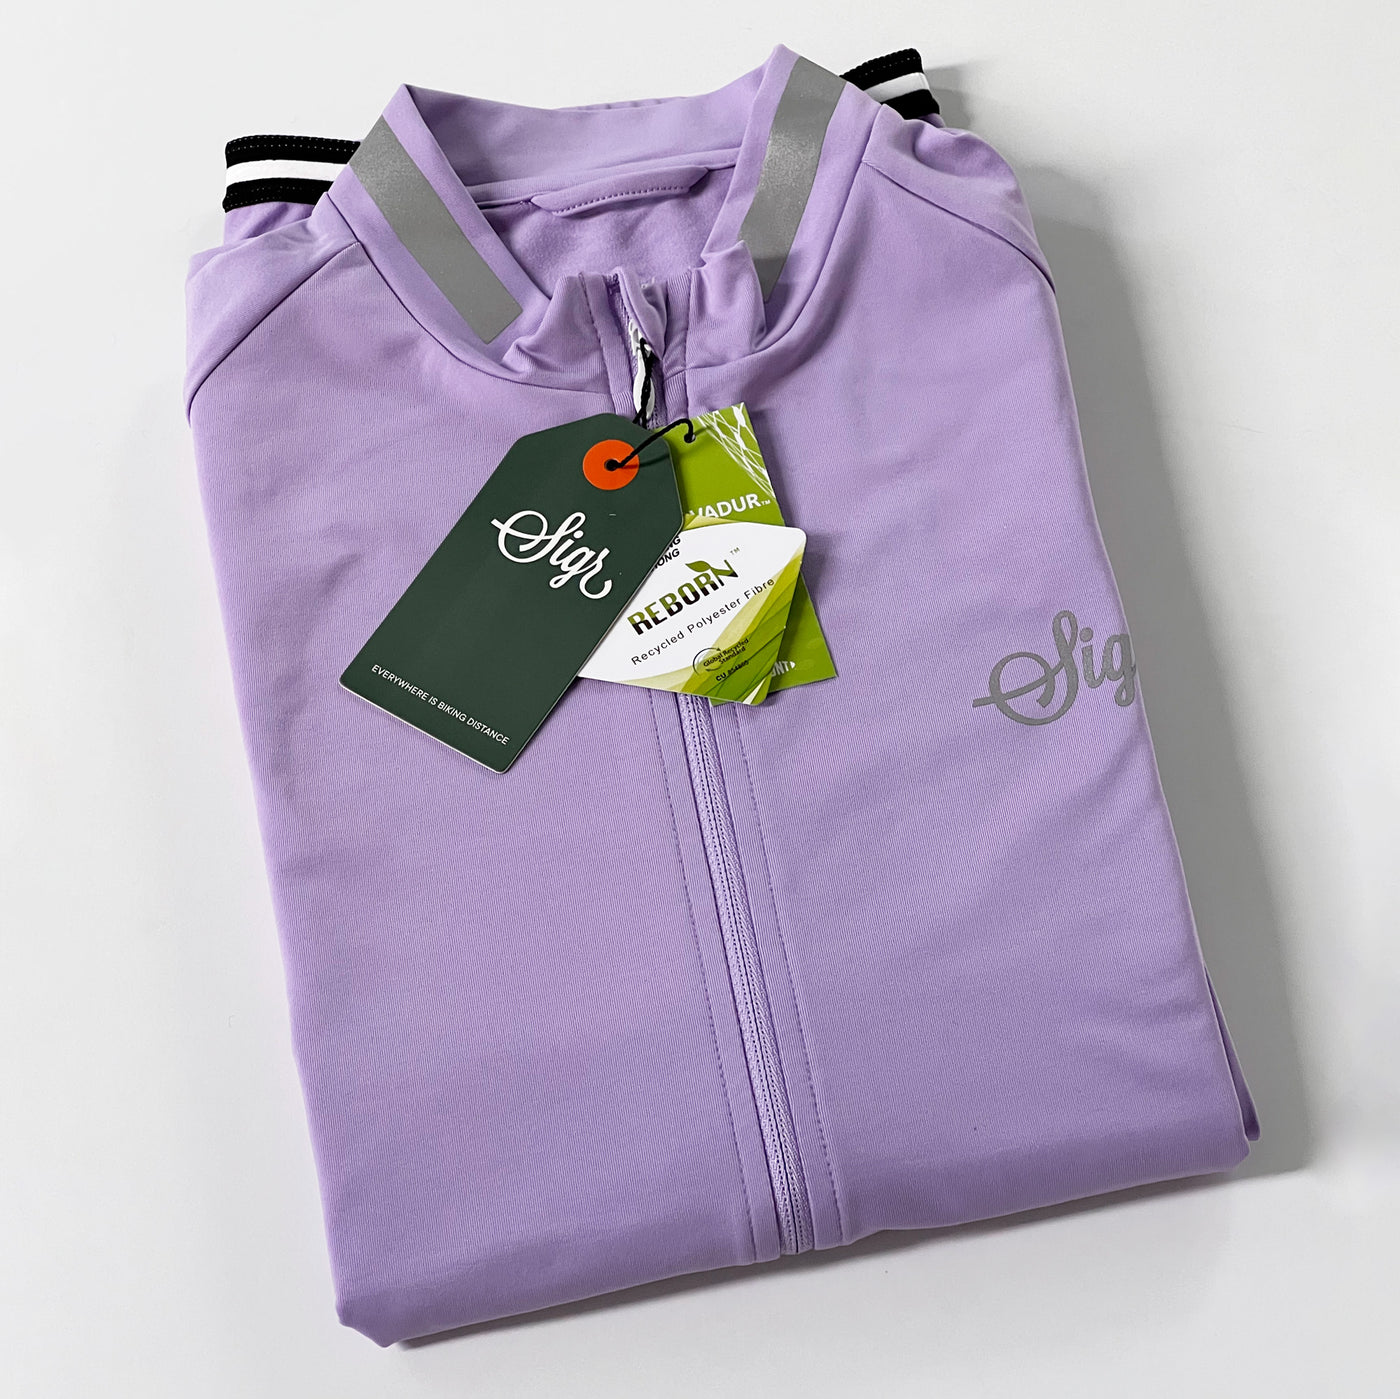 Sigr Wildflower - Light Purple Long Sleeved Jersey for Men